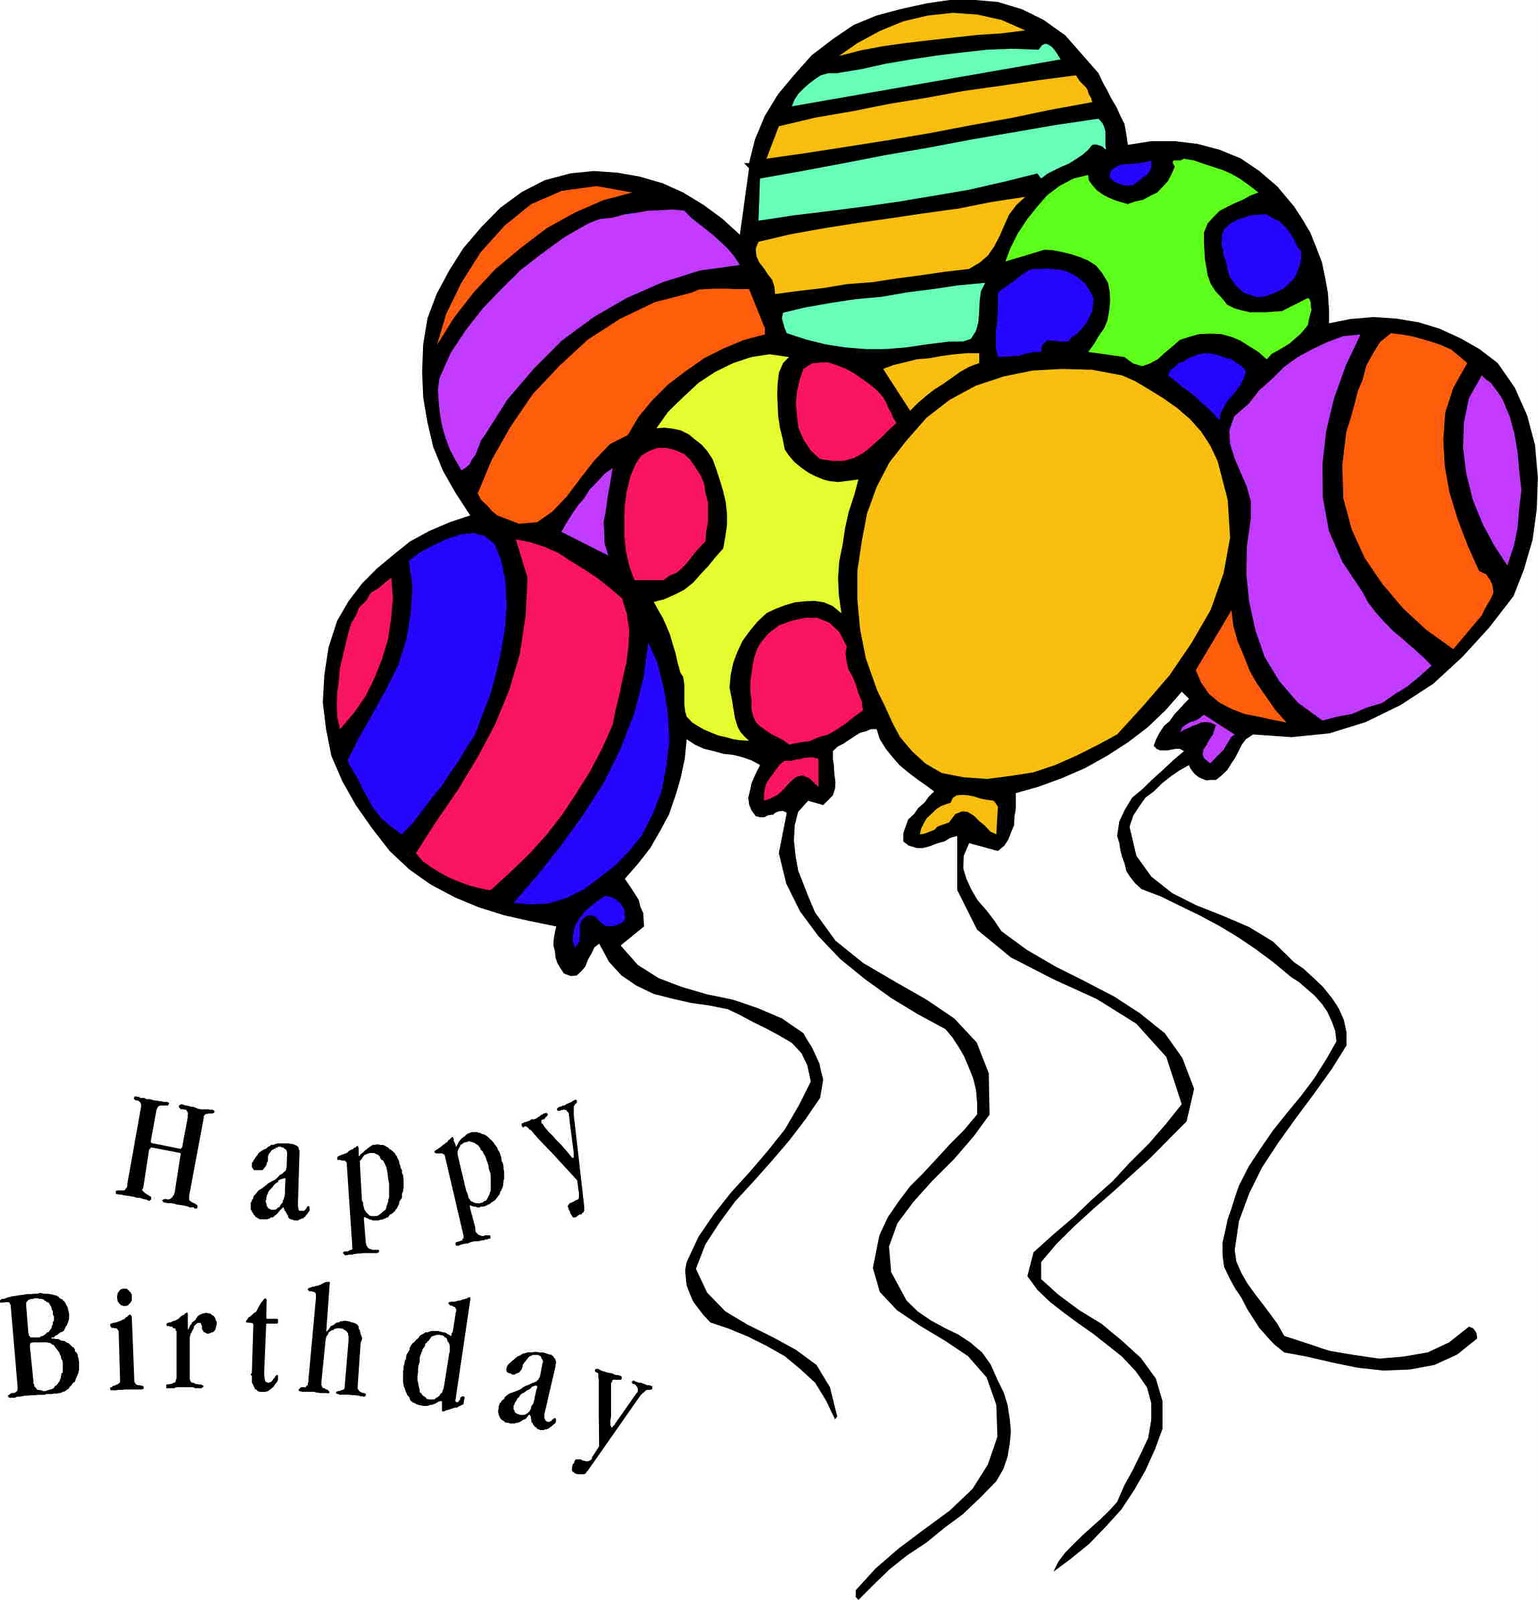 Happy birthday balloons clipart 2 - Clipartix